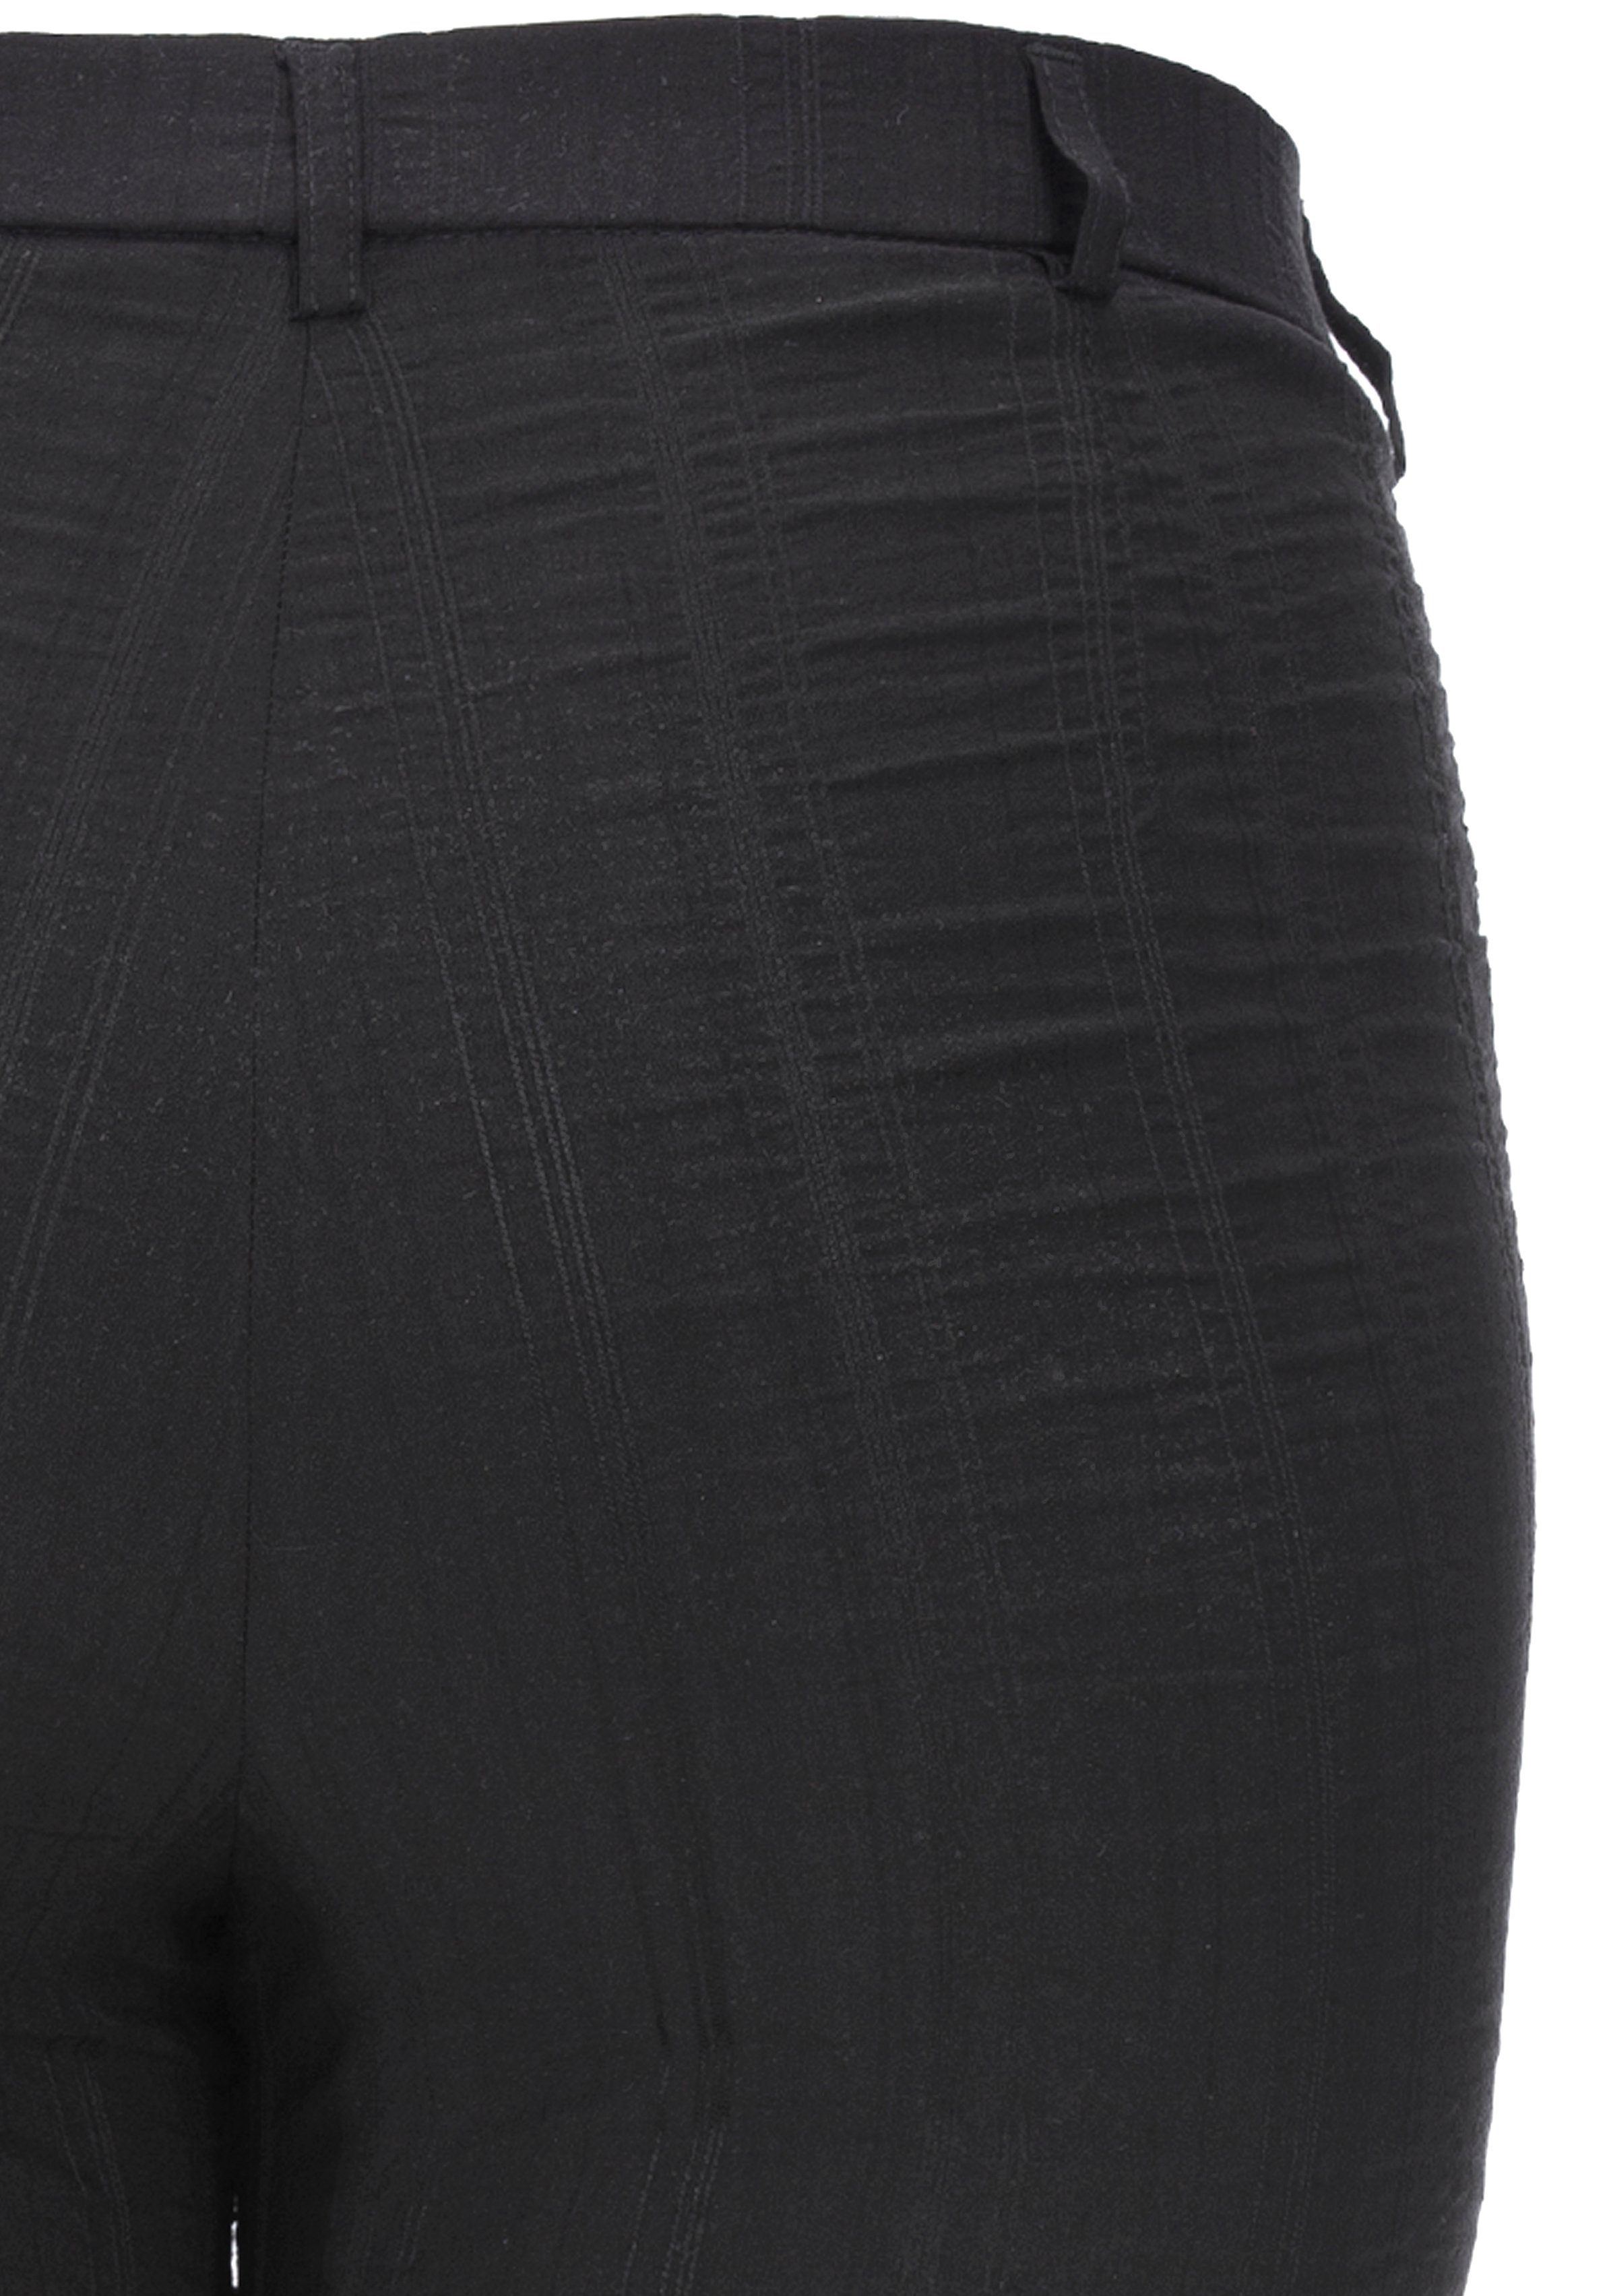 KjBRAND Stoffhose optimale schwarz gestreift Bea Quer-Stretch Passform in